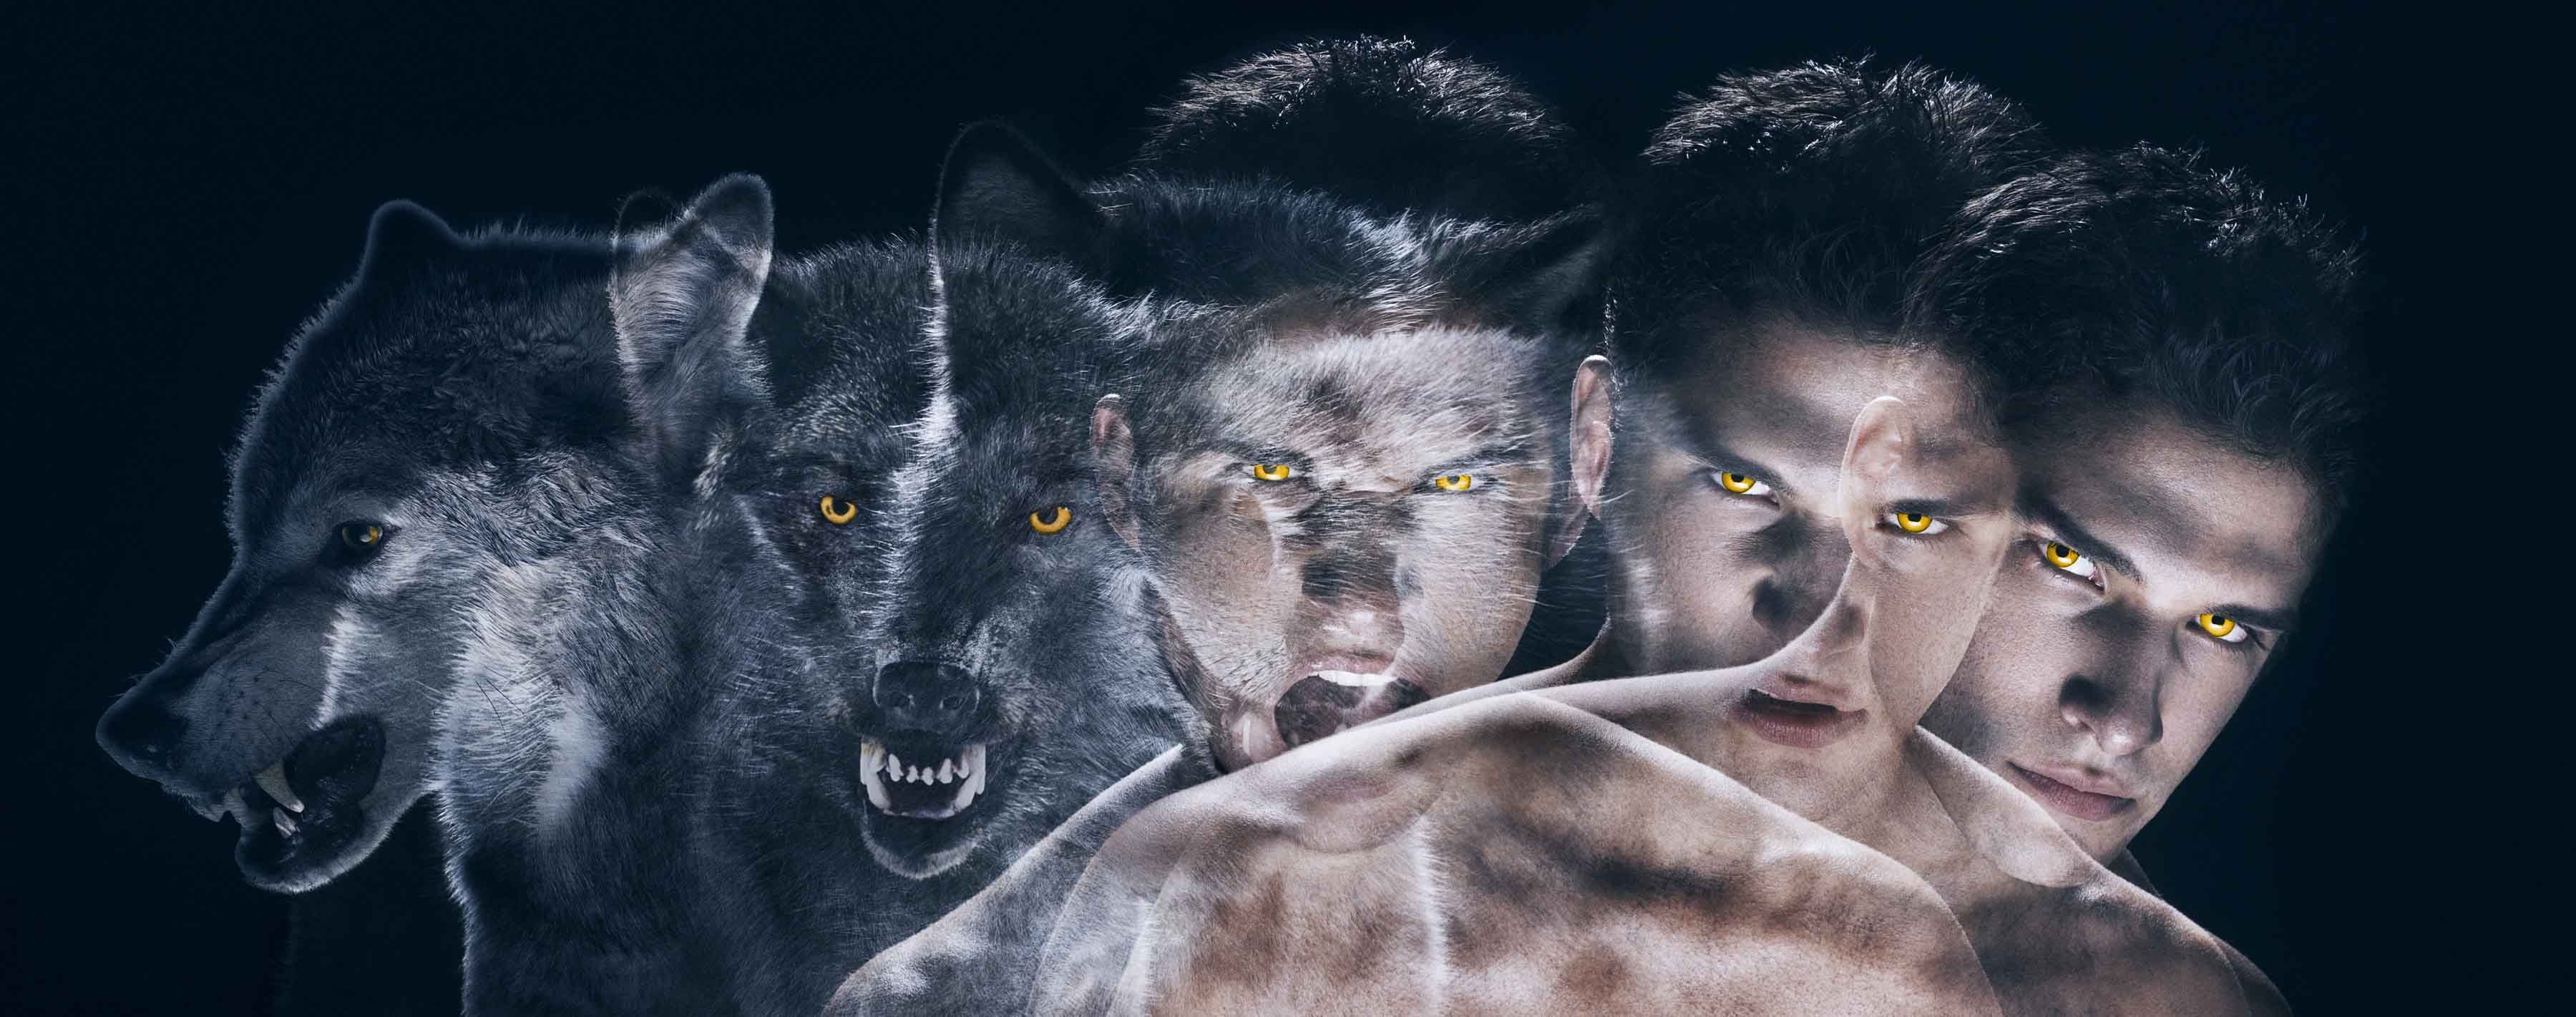 Teen Wolf TV series, Dark and brooding, Mysterious creatures, Supernatural powers, 3600x1430 Dual Screen Desktop